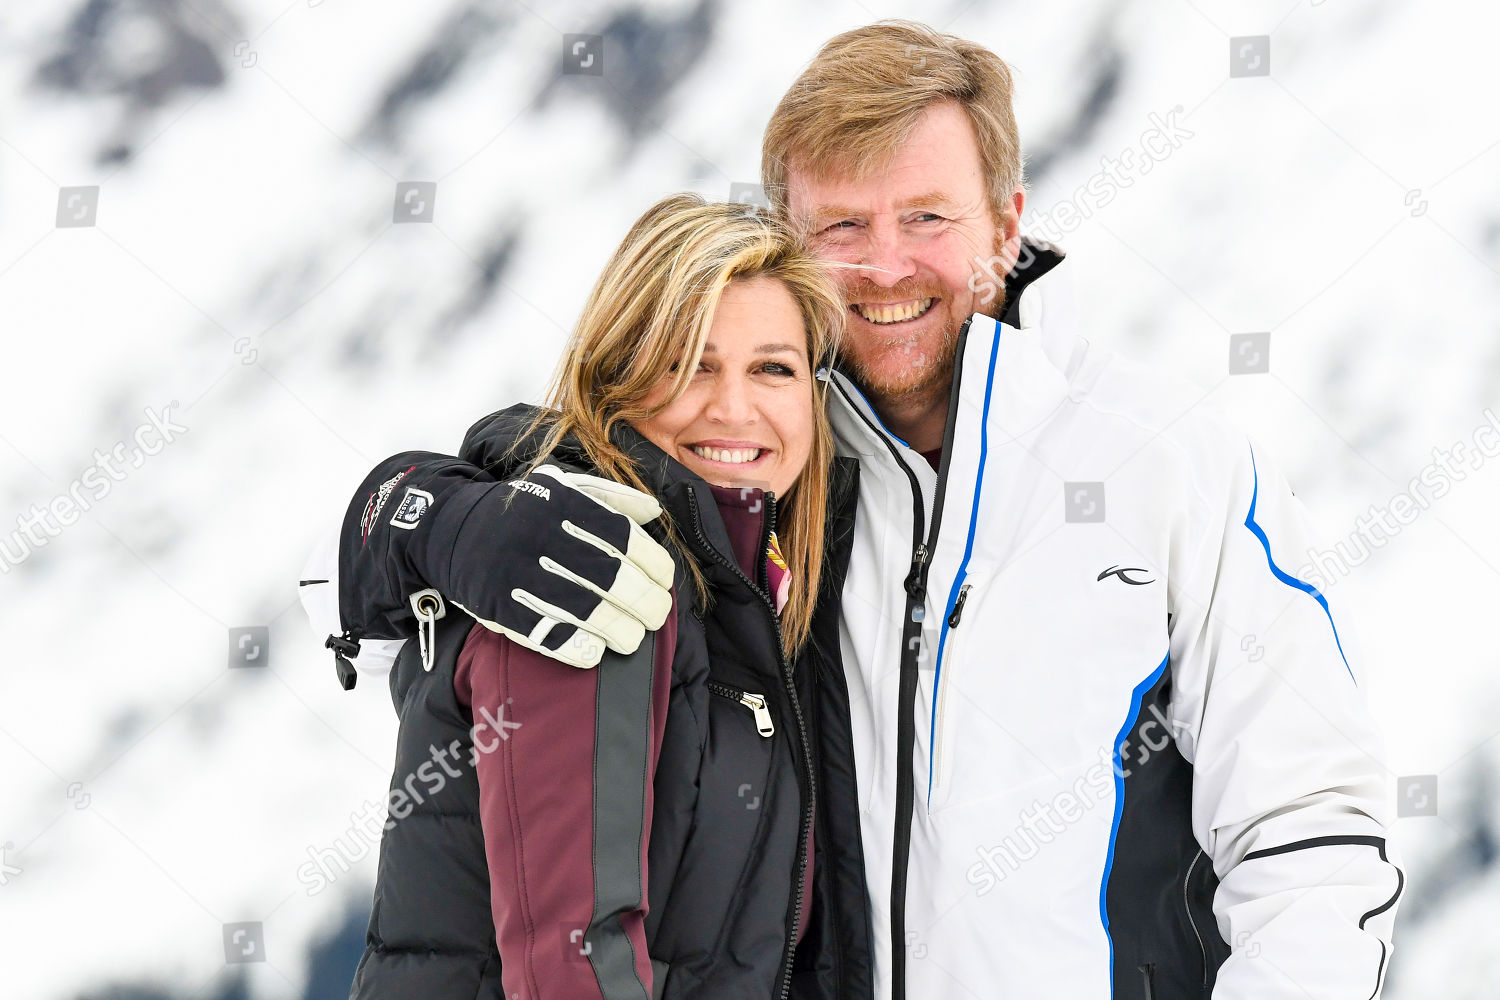 dutch-royal-family-winter-holiday-photocall-lech-austria-shutterstock-editorial-10566567z.jpg